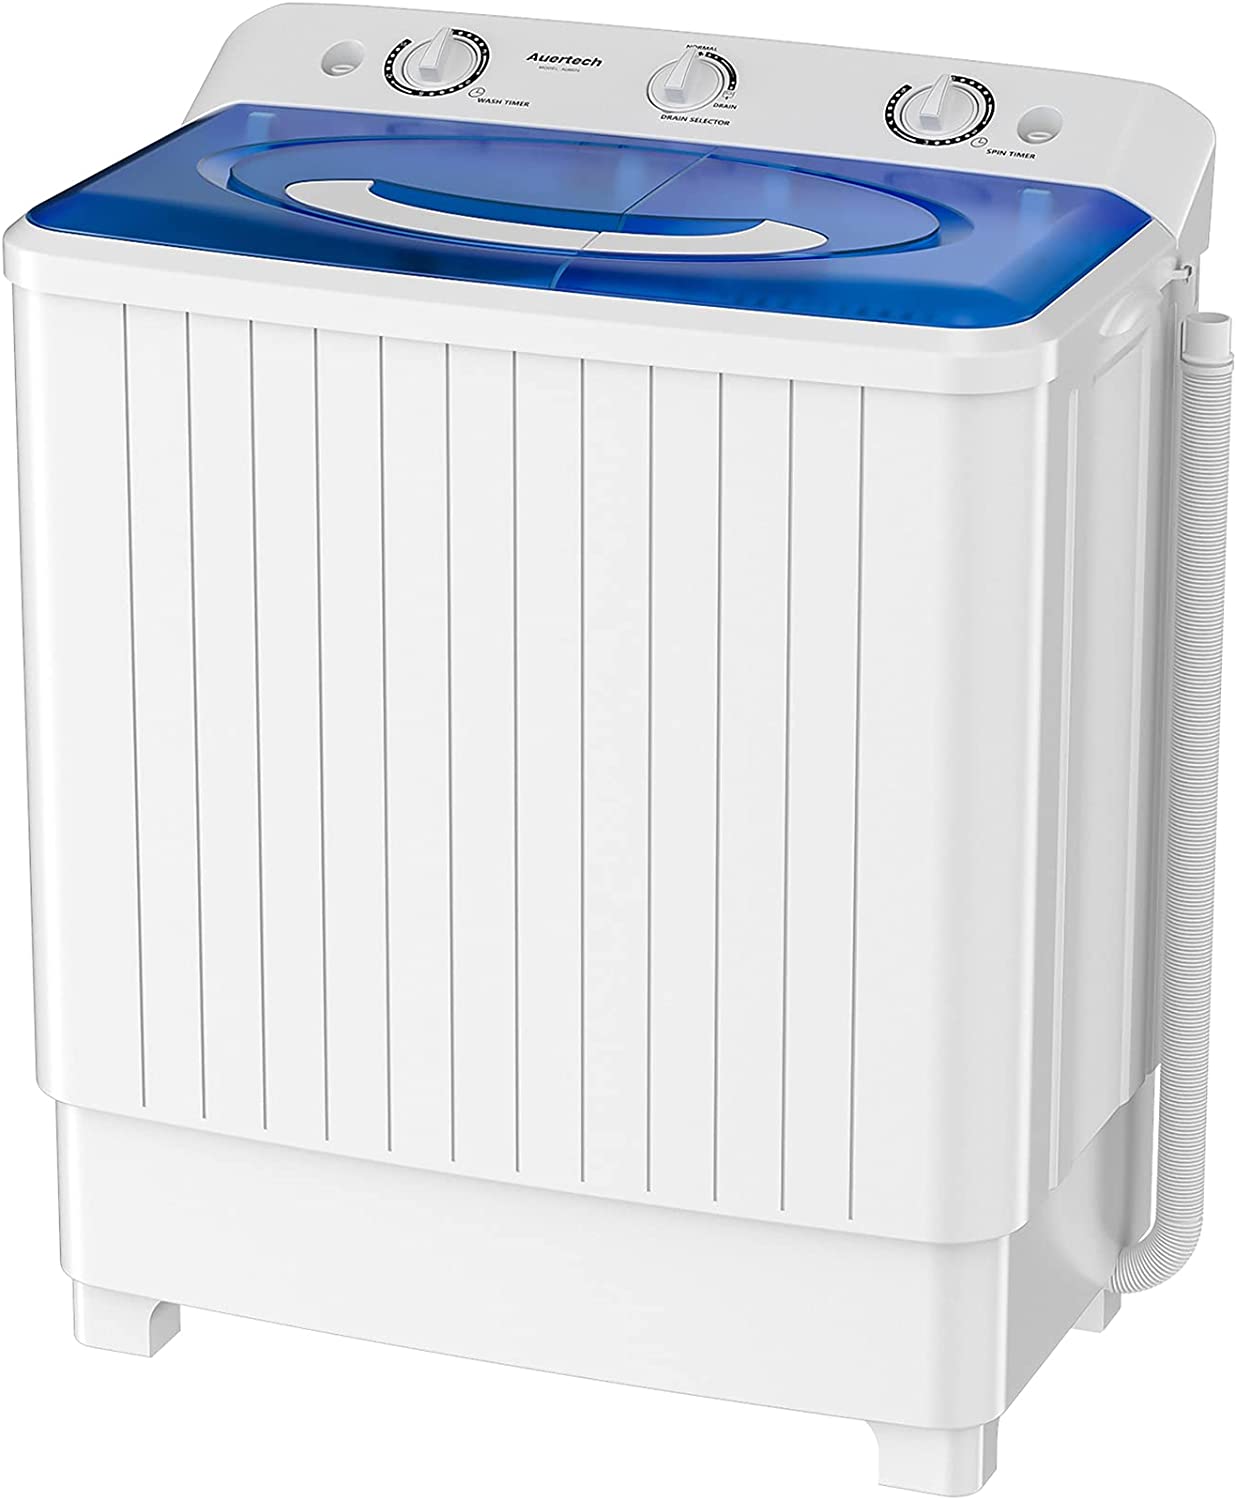 1. Auertech Portable Washing Machine Top Loader